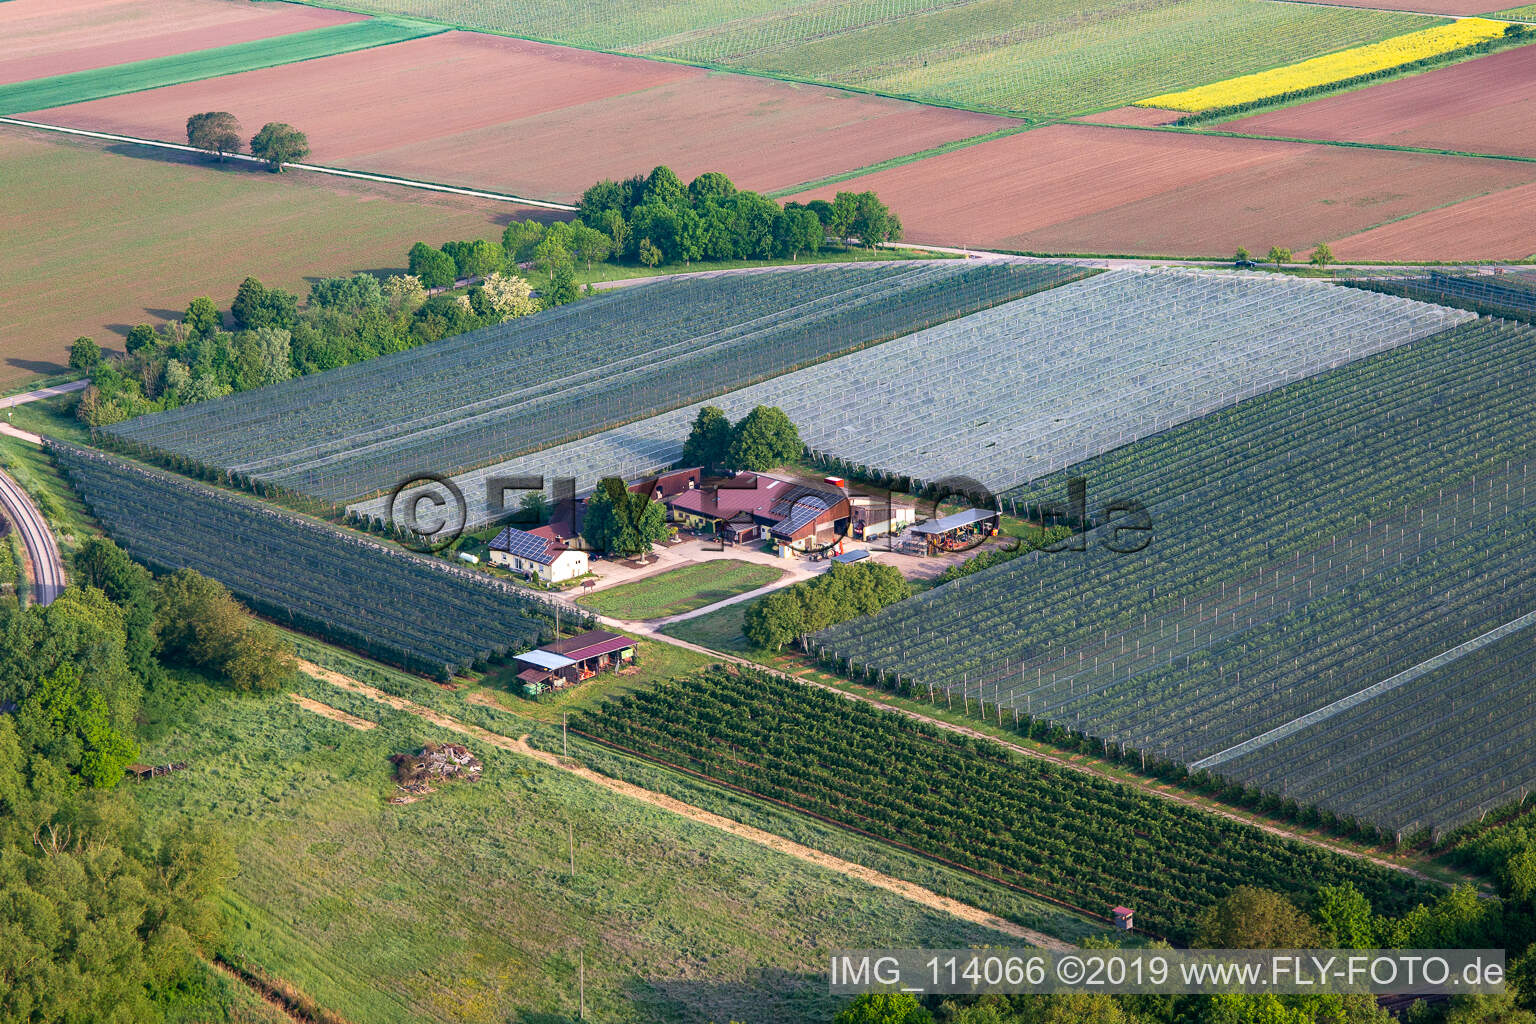 Gensheimer fruit and spagel farm in Steinweiler in the state Rhineland-Palatinate, Germany